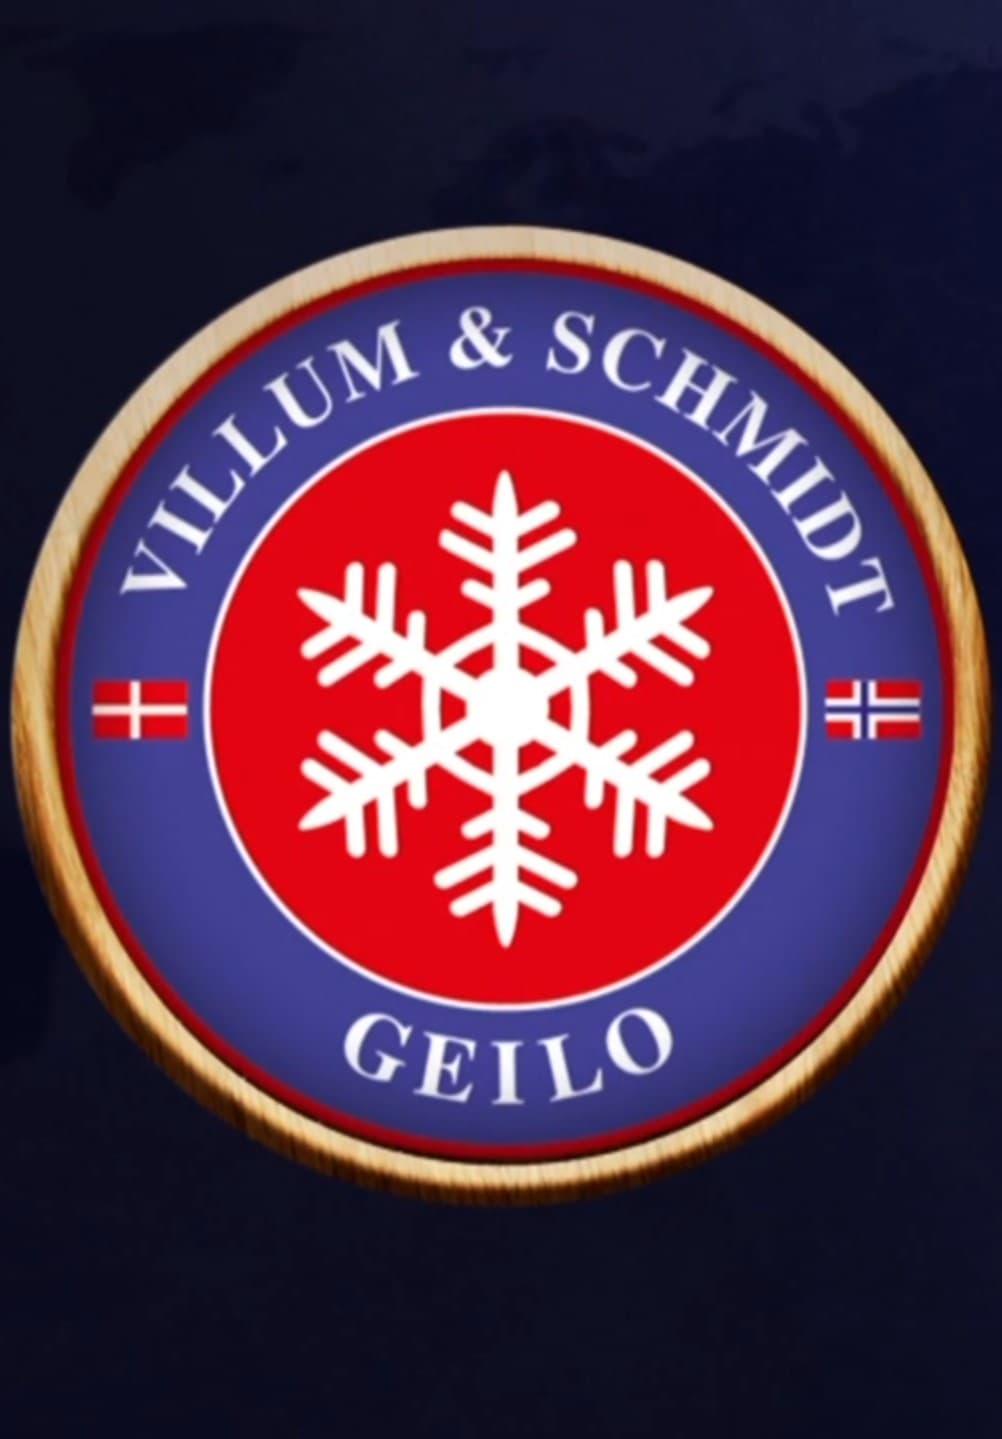 Villum & Schmidt - Vinter i Geilo